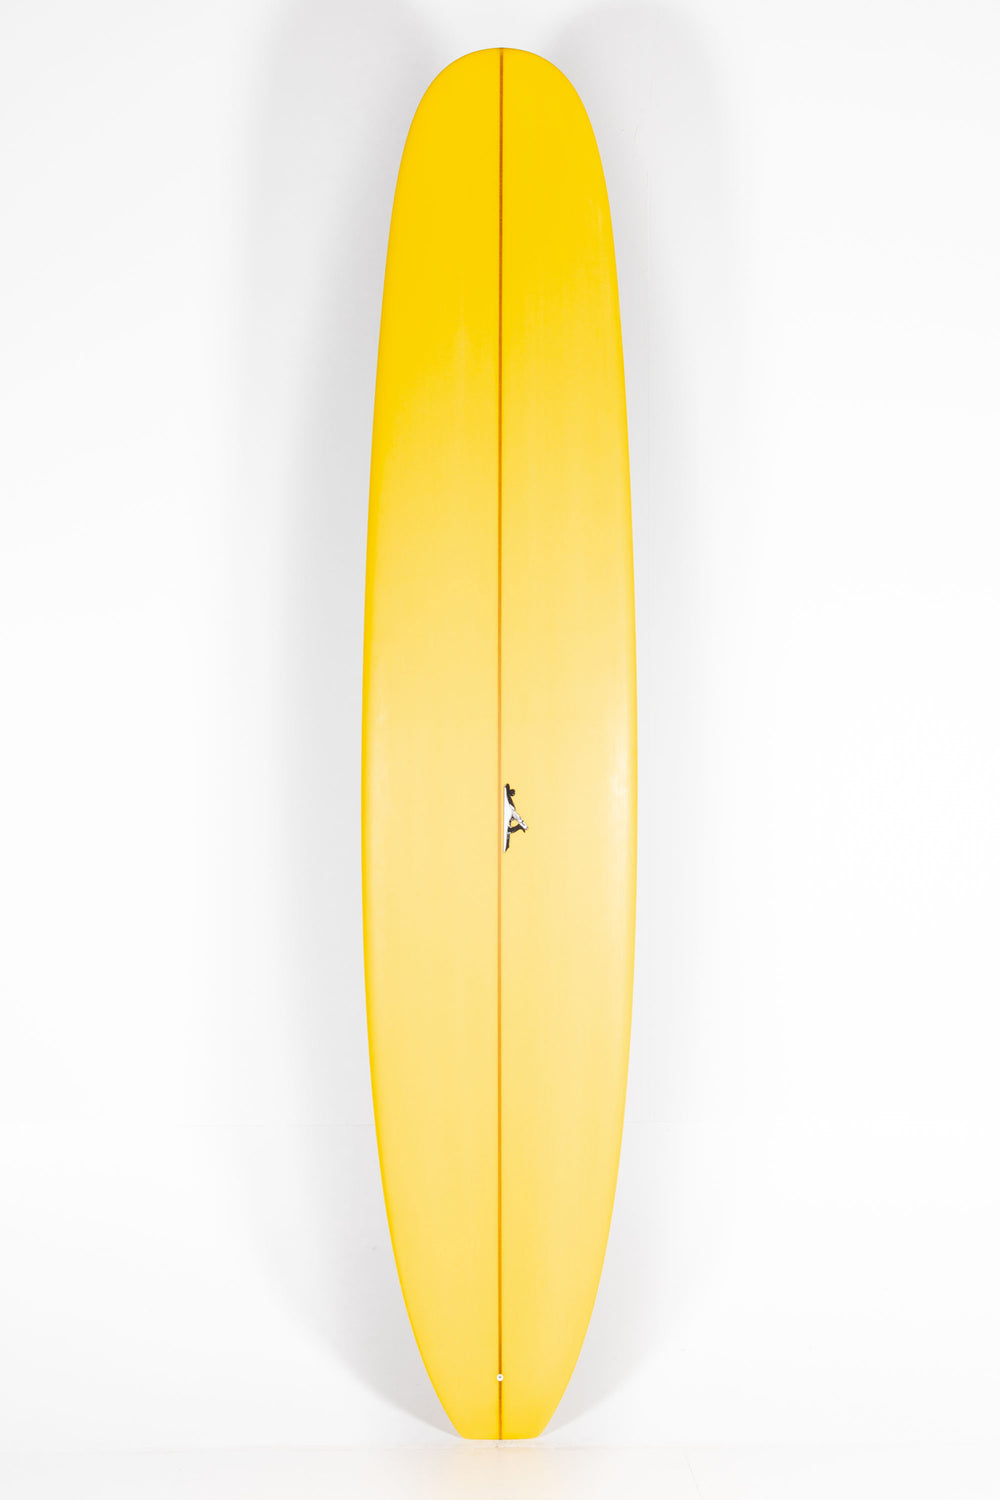 Thomas Surfboards - KEEPER - 9'6